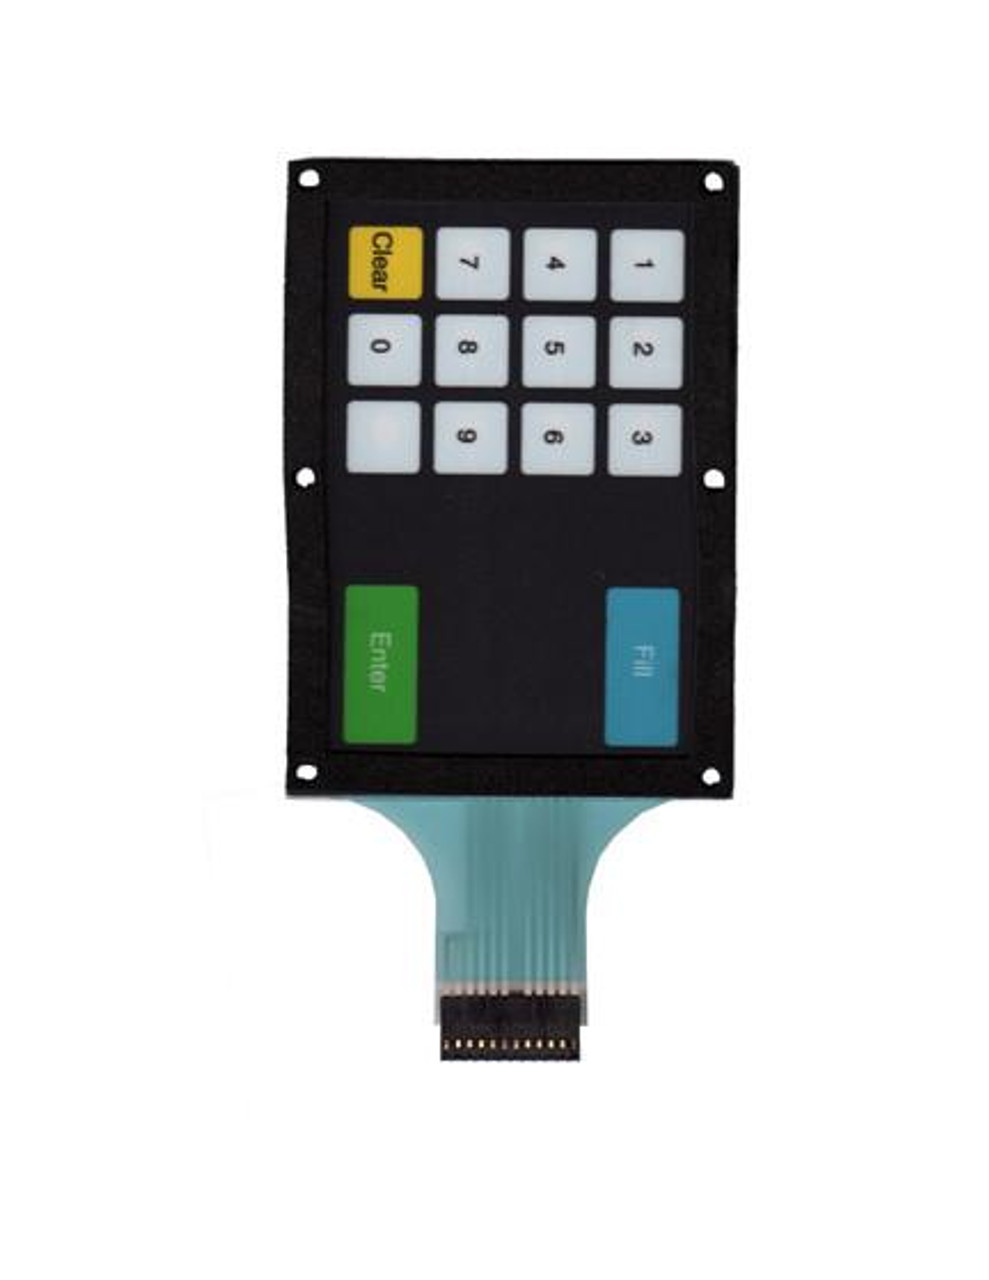 0080080-002 - Keypad